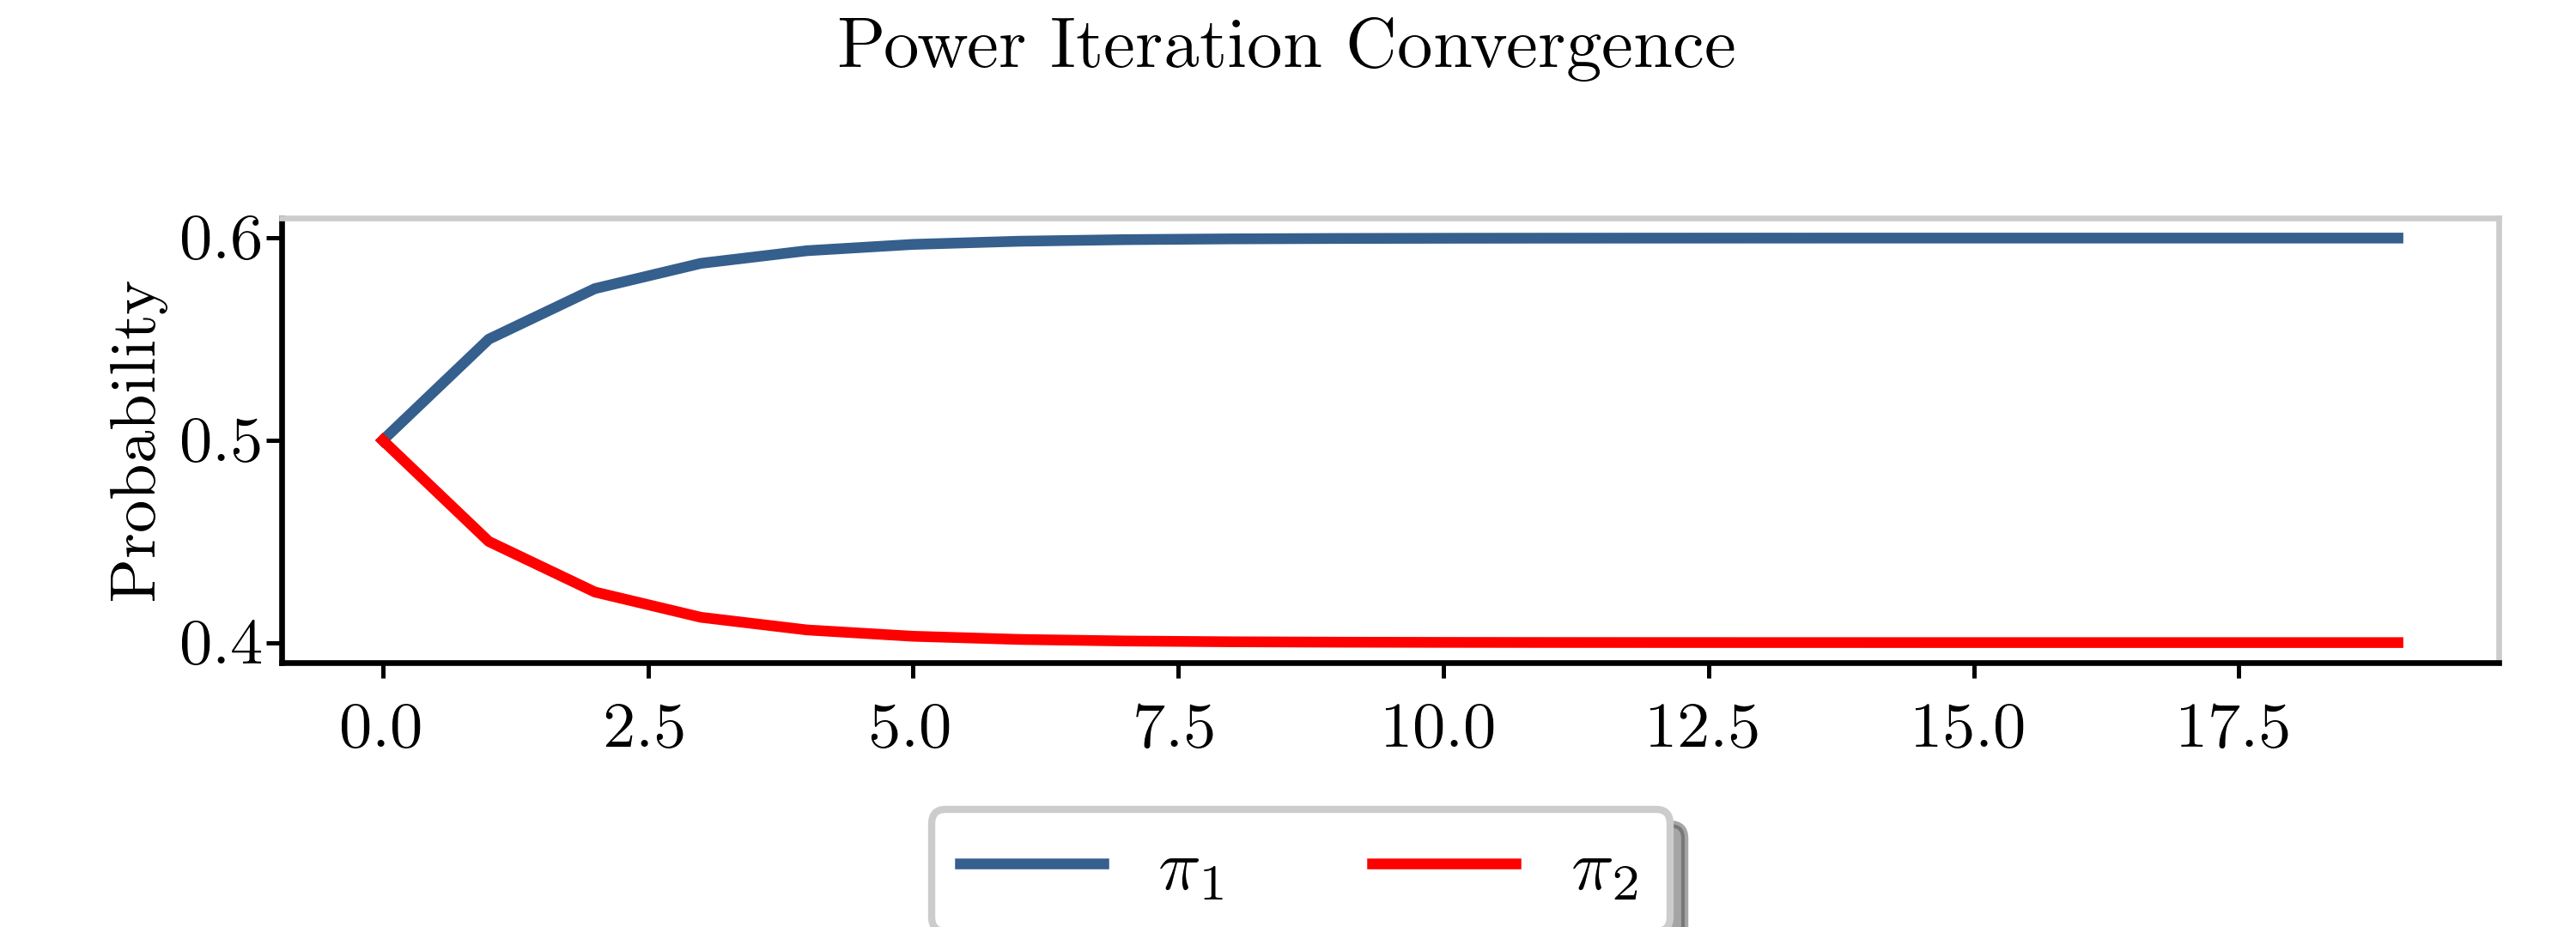 Power iteration convergence